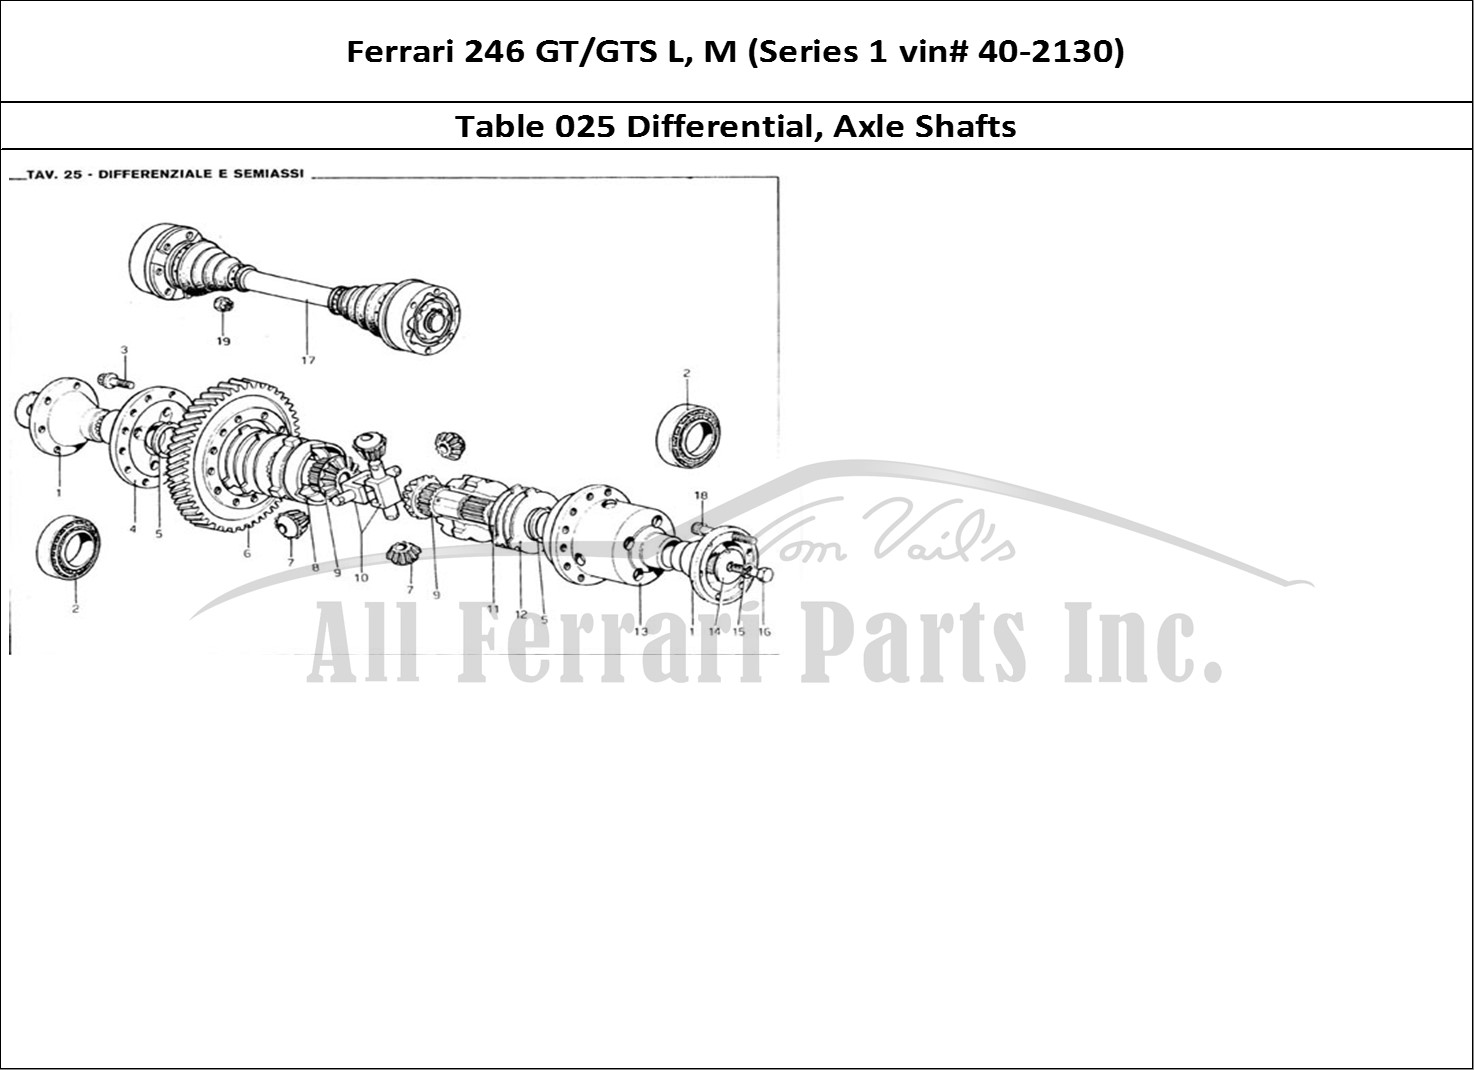 Ferrari Parts Ferrari 246 GT Series 1 Page 025 Differential & Axle Shaft